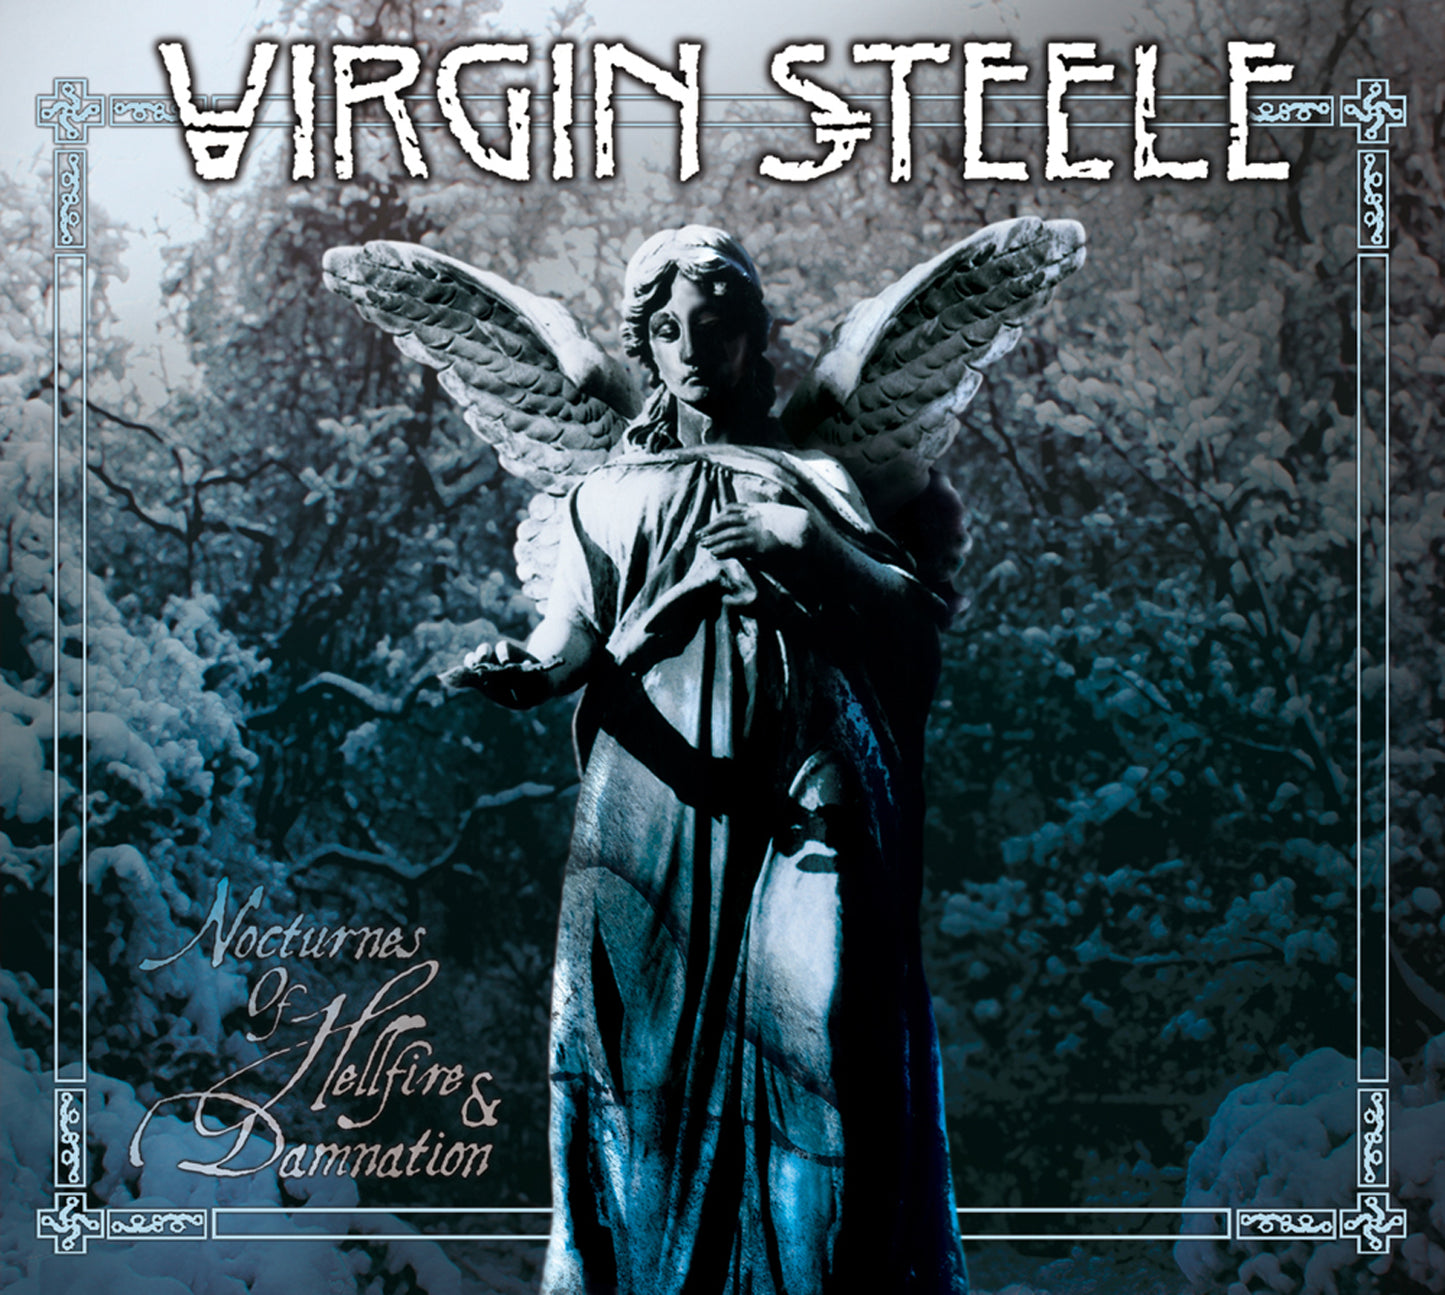 Virgin Steele "Nocturnes Of Hellfire & Damnation" 2CD